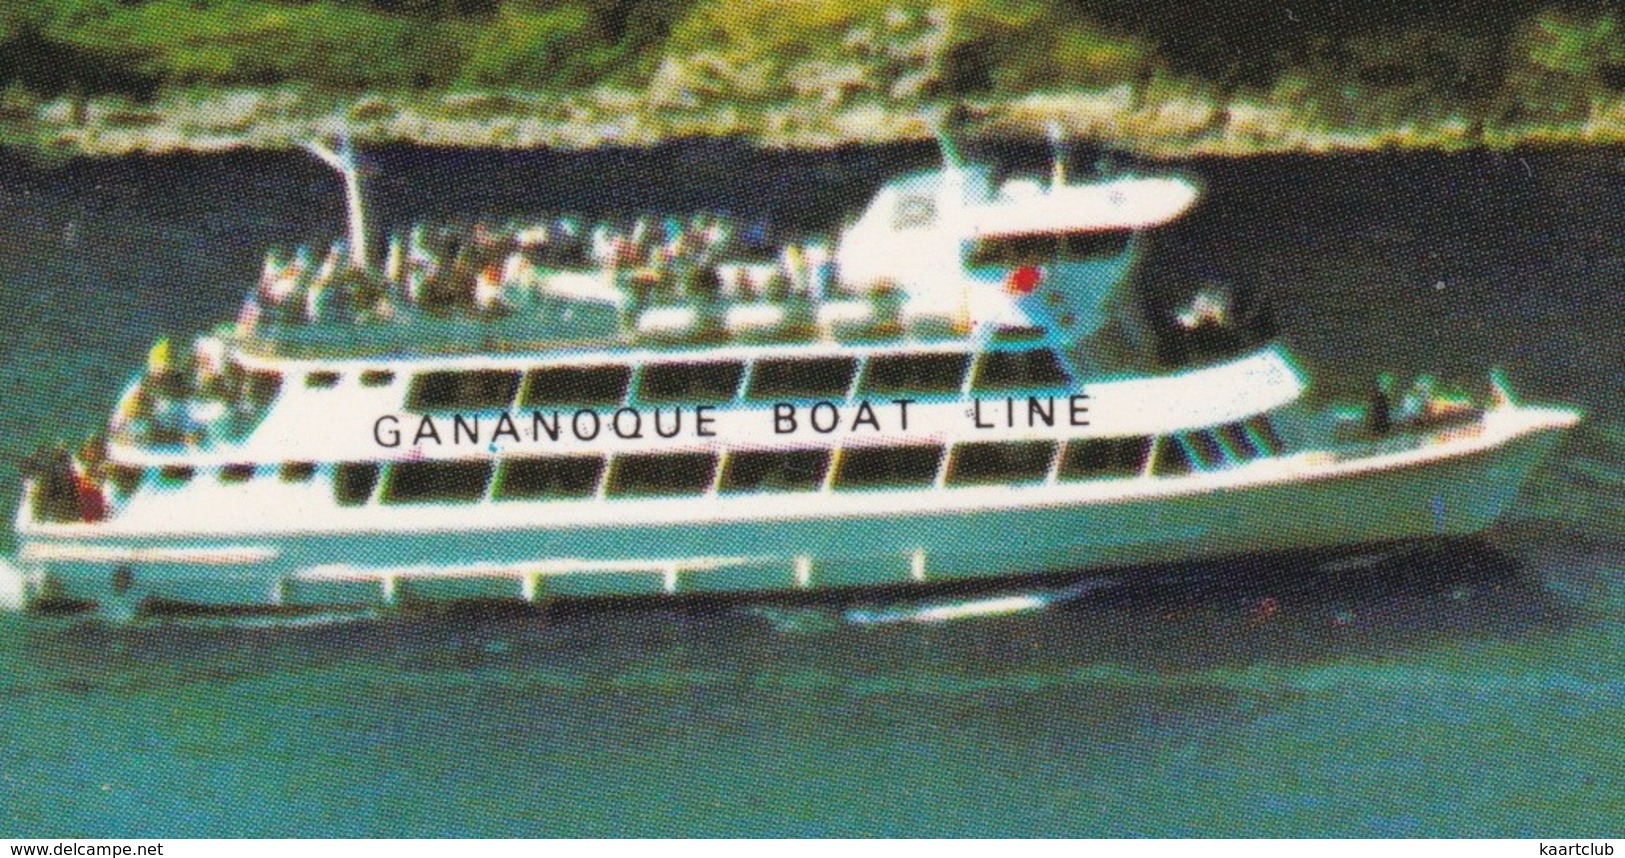 Boldt Castle, 1000 Islands - Tour Boat 'Ganaoque Boat Line' - St. Lawrence Seeway - (Canada) - Gananoque